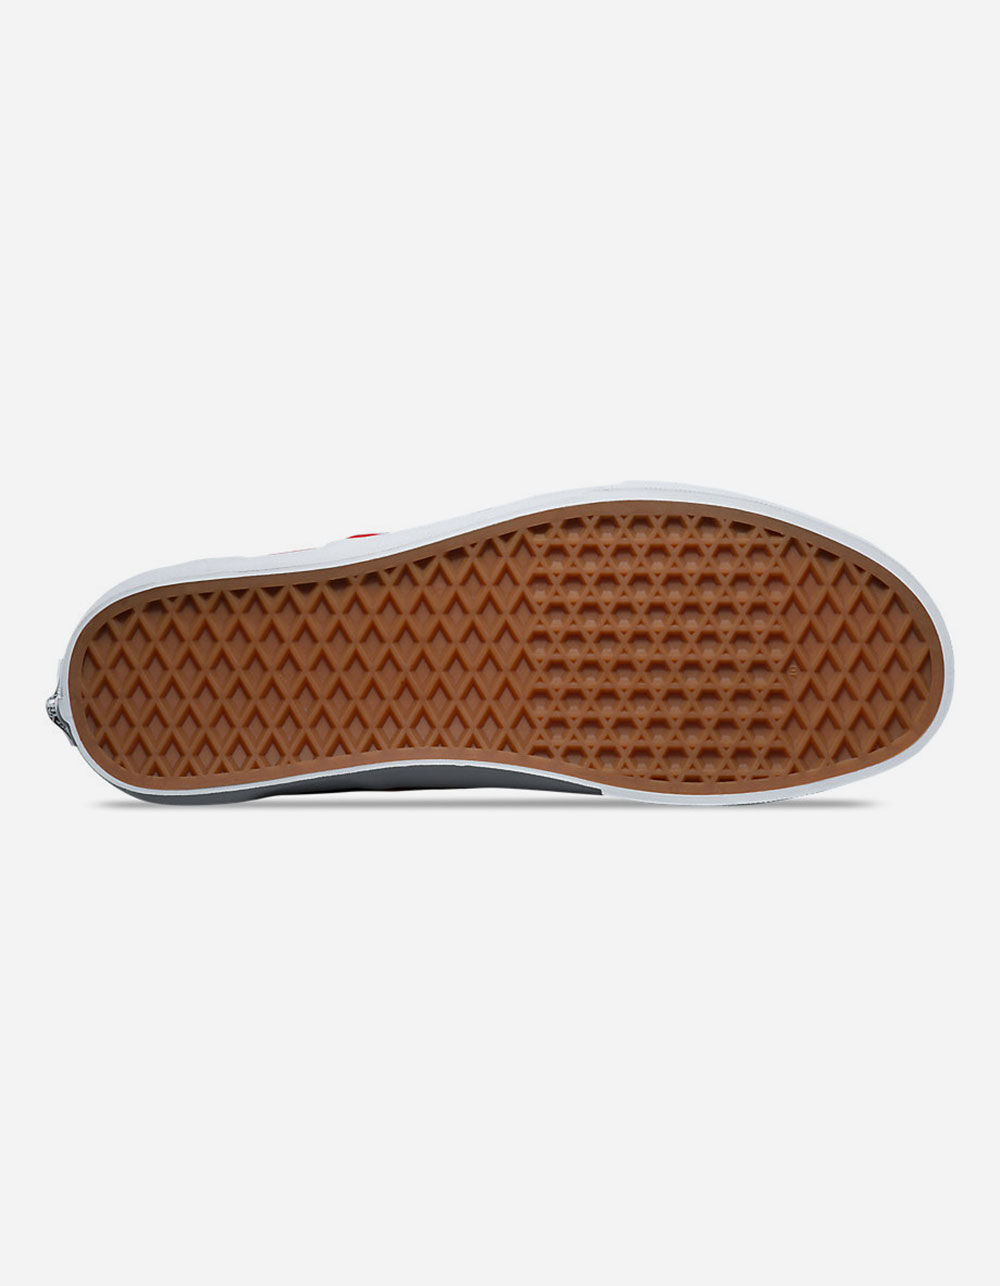 VANS Primary Check Slip-On Red & White Shoes - RED/WHITE | Tillys